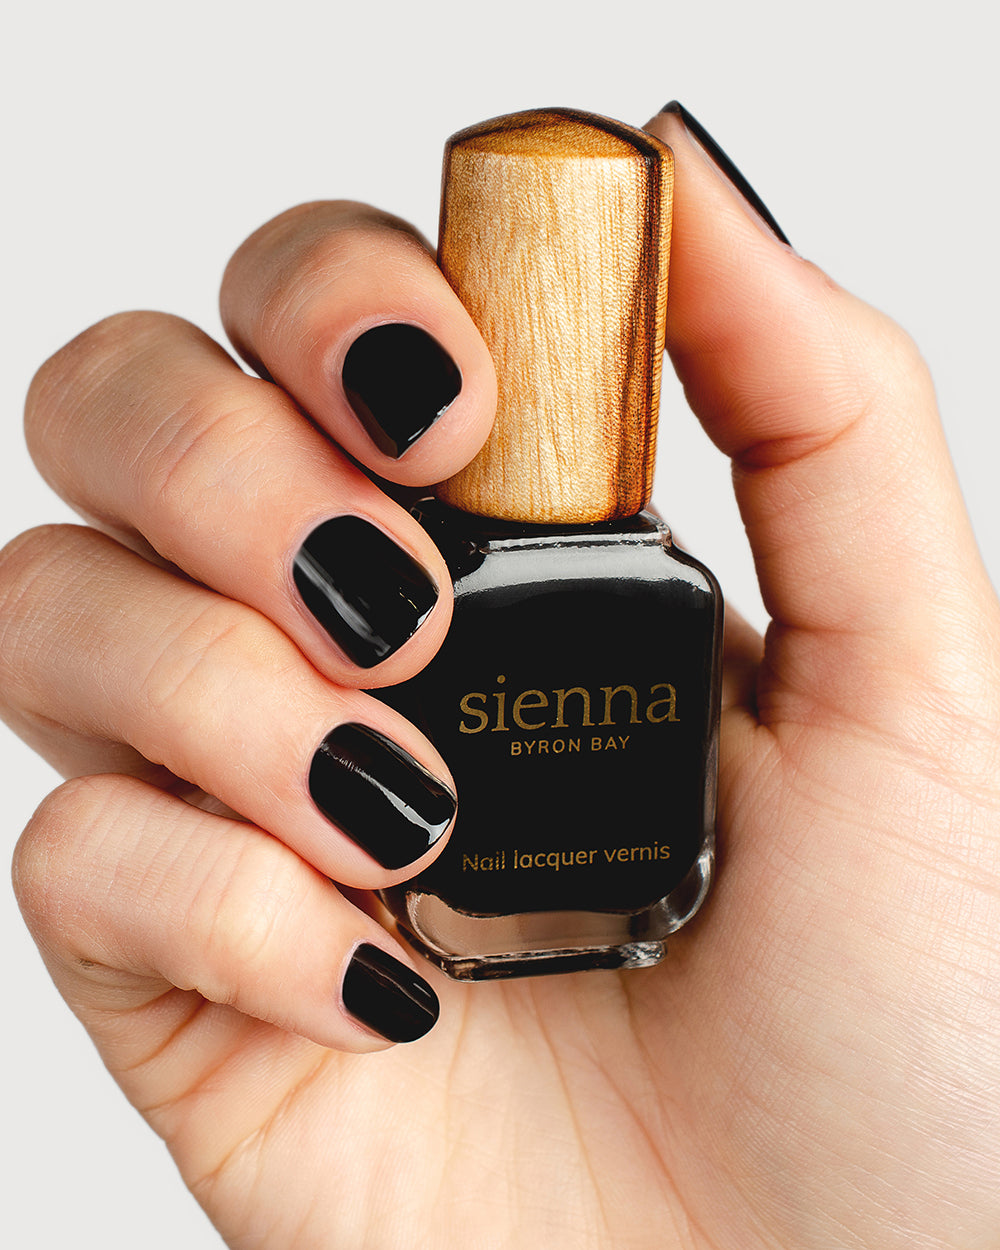 fair skin tone wearing black nail polish holding a sienna byron bay bottle